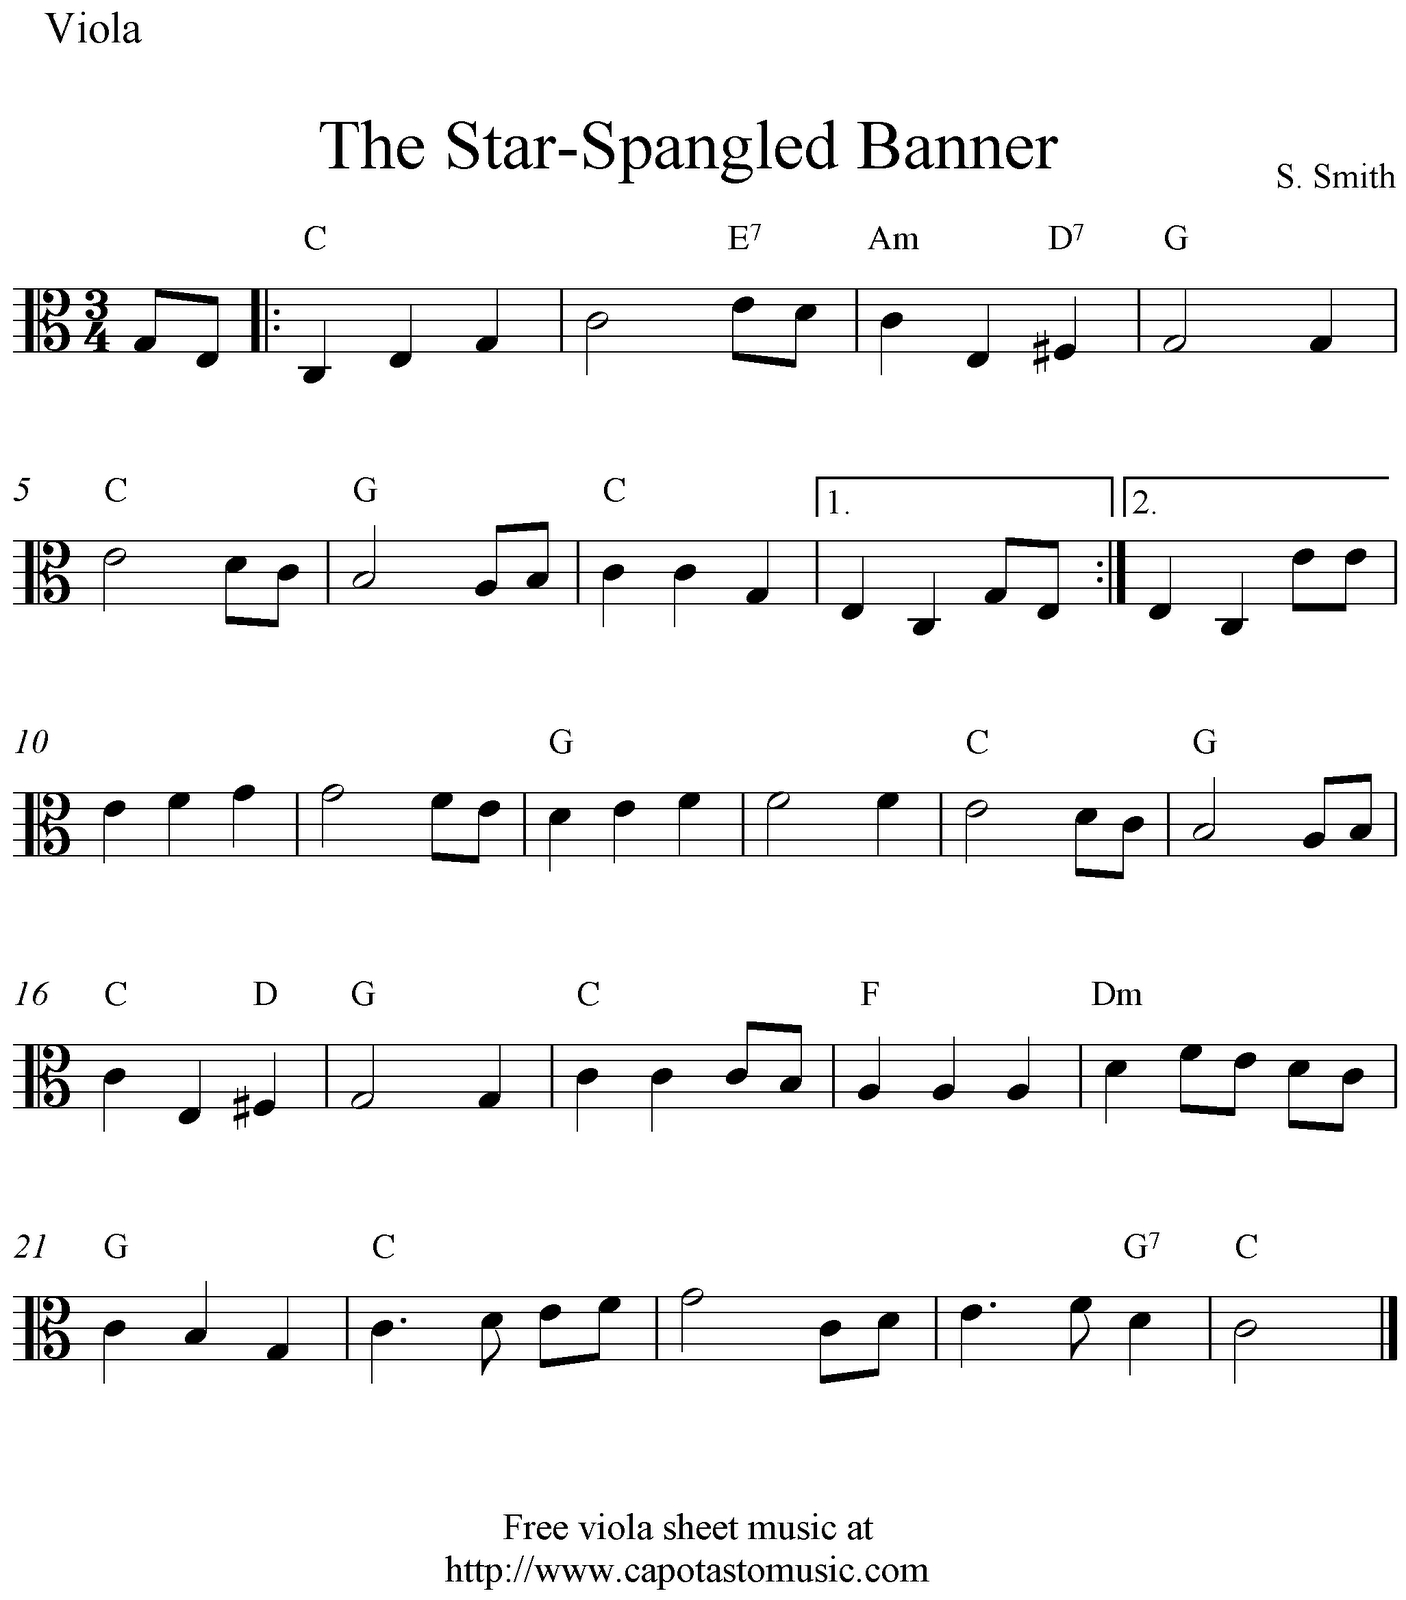 Free Viola Sheet Music, The Star-Spangled Banner - Viola Sheet Music Free Printable